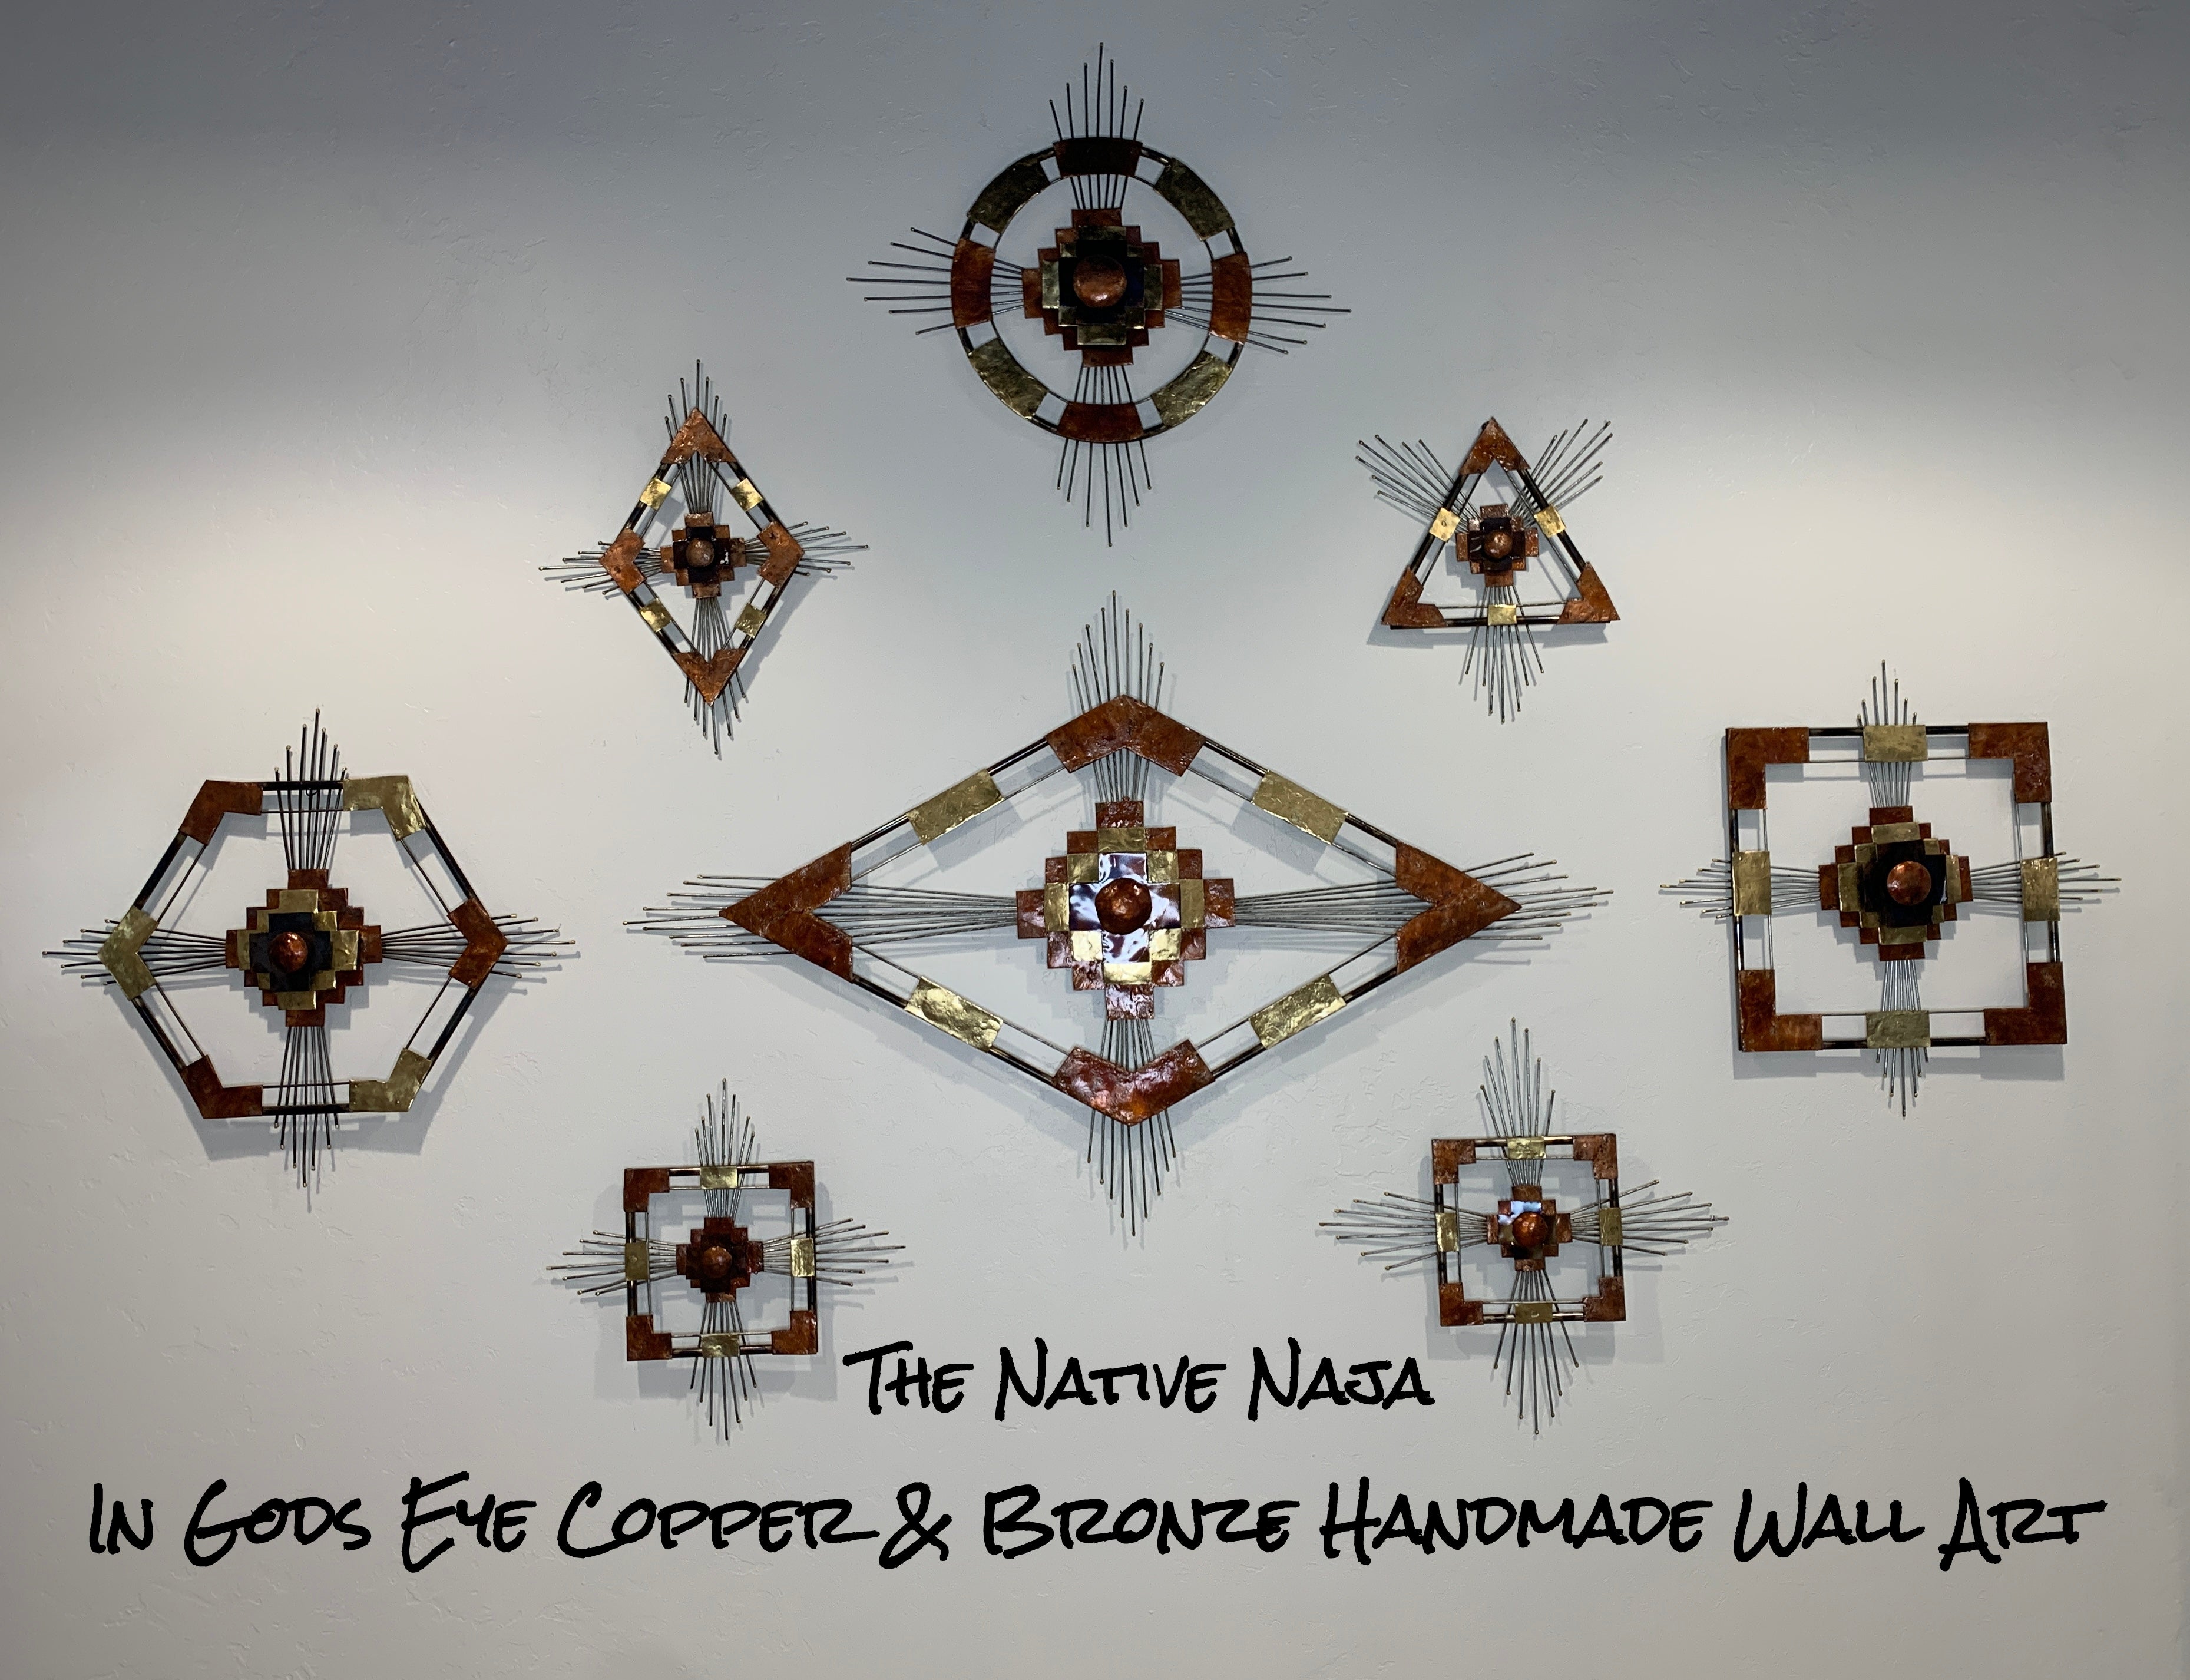 In Gods Eye Copper & Bronze Handmade Wall Art Small Triangle